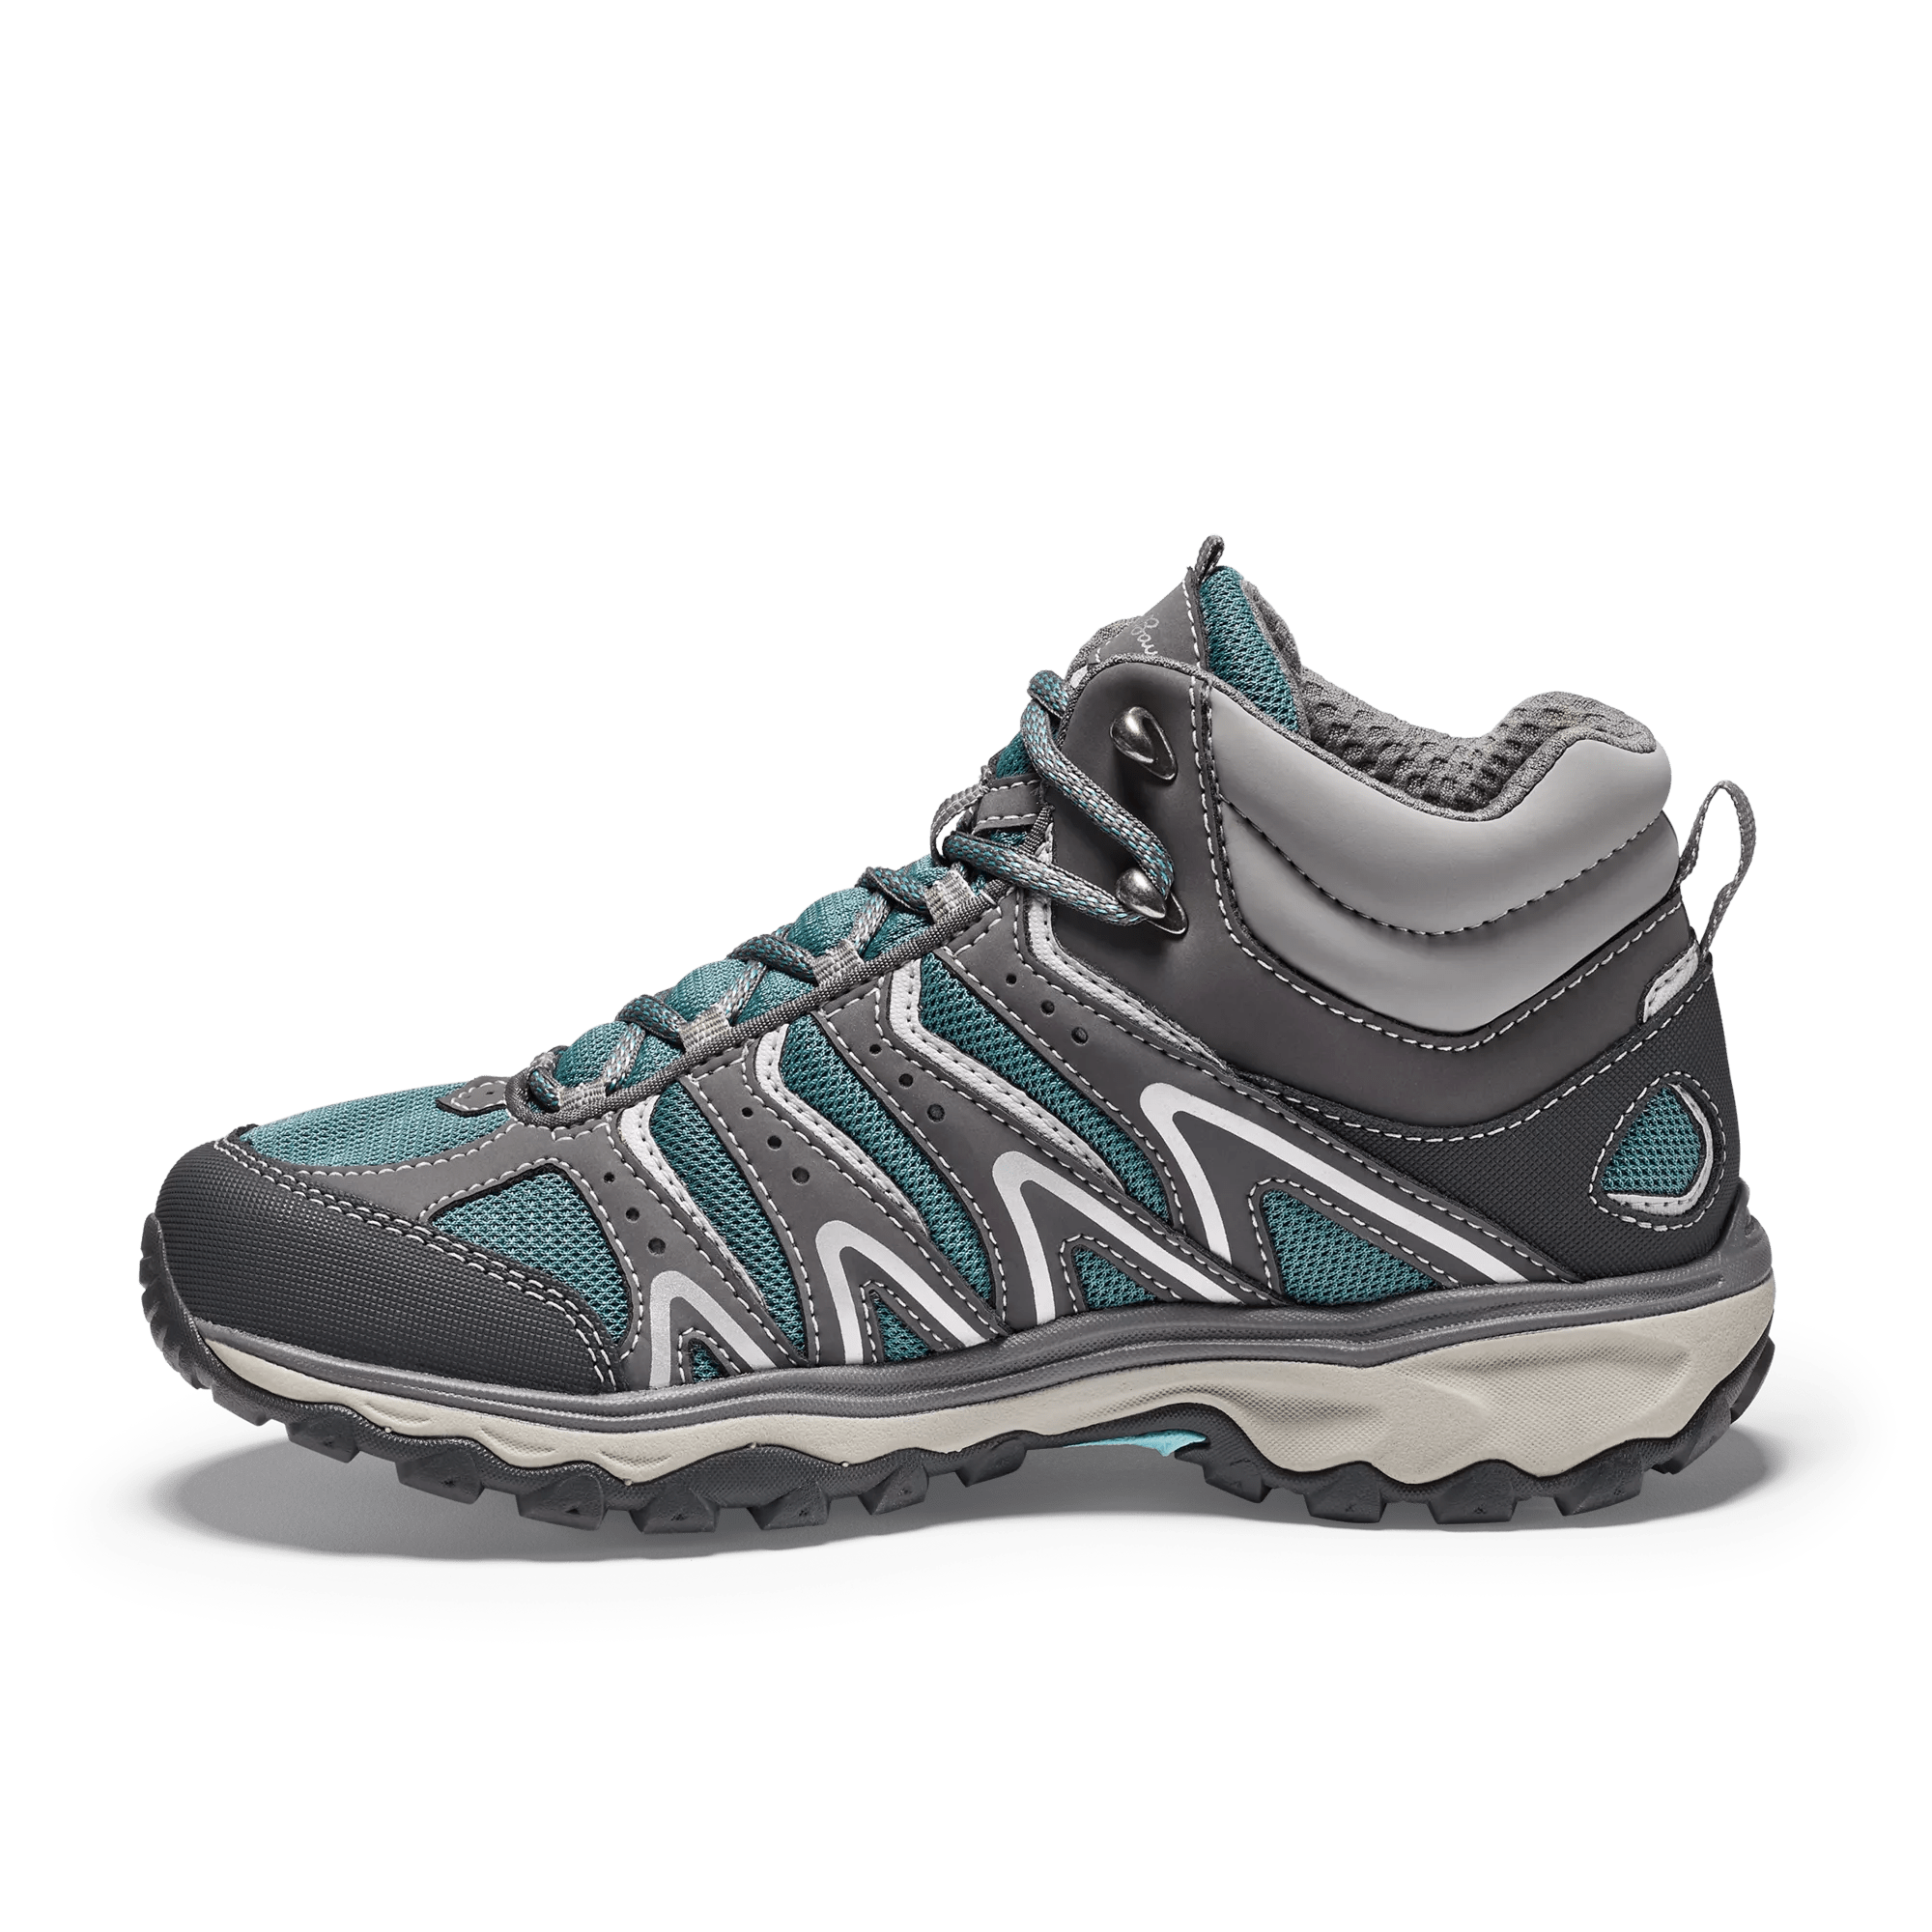 Lukla Pro Mid Hiking Boots